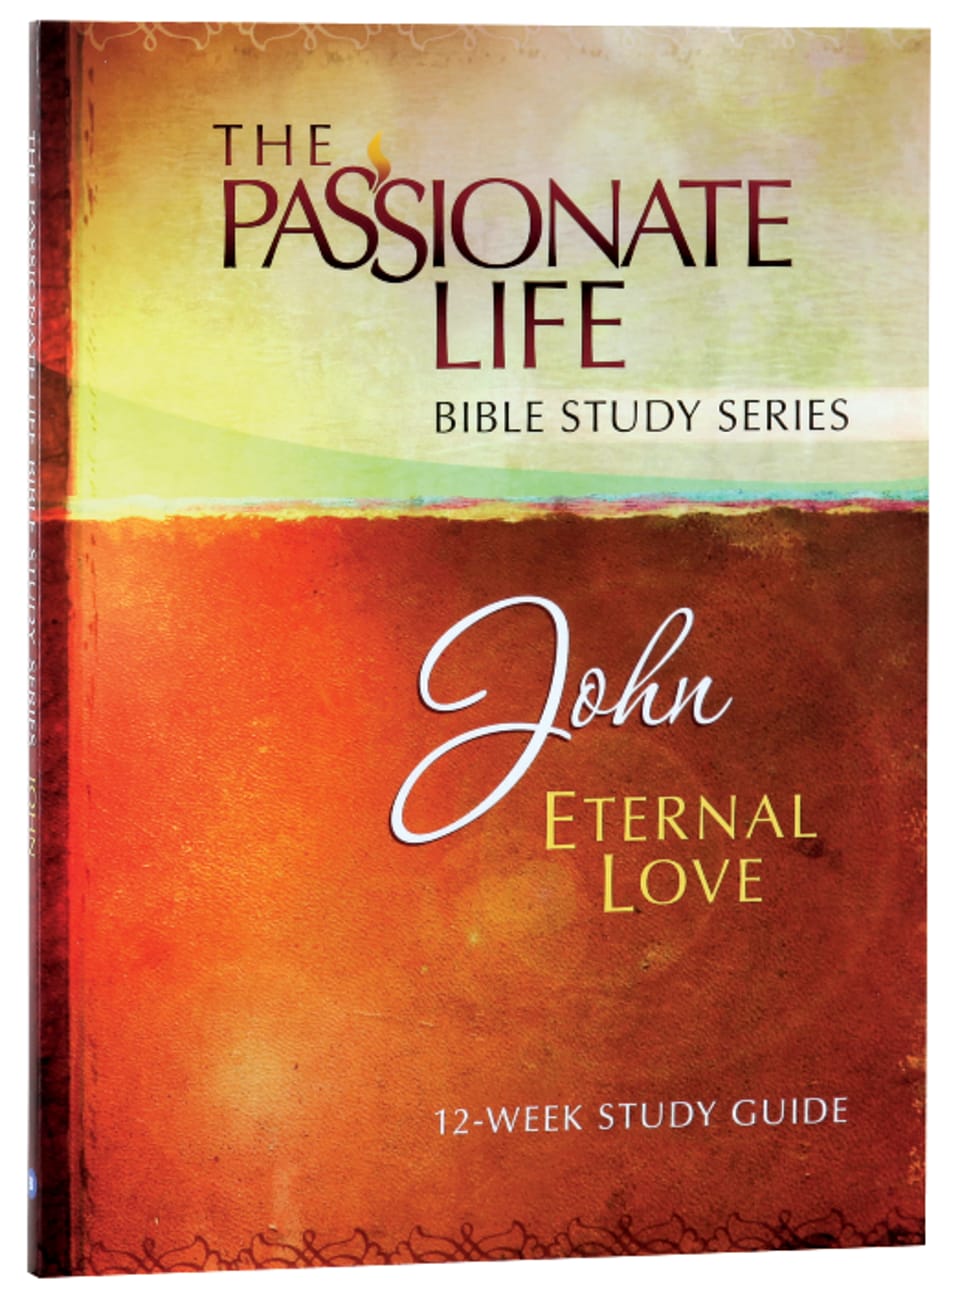 John - Eternal Love (The Passionate Life Bible Study Series) Paperback